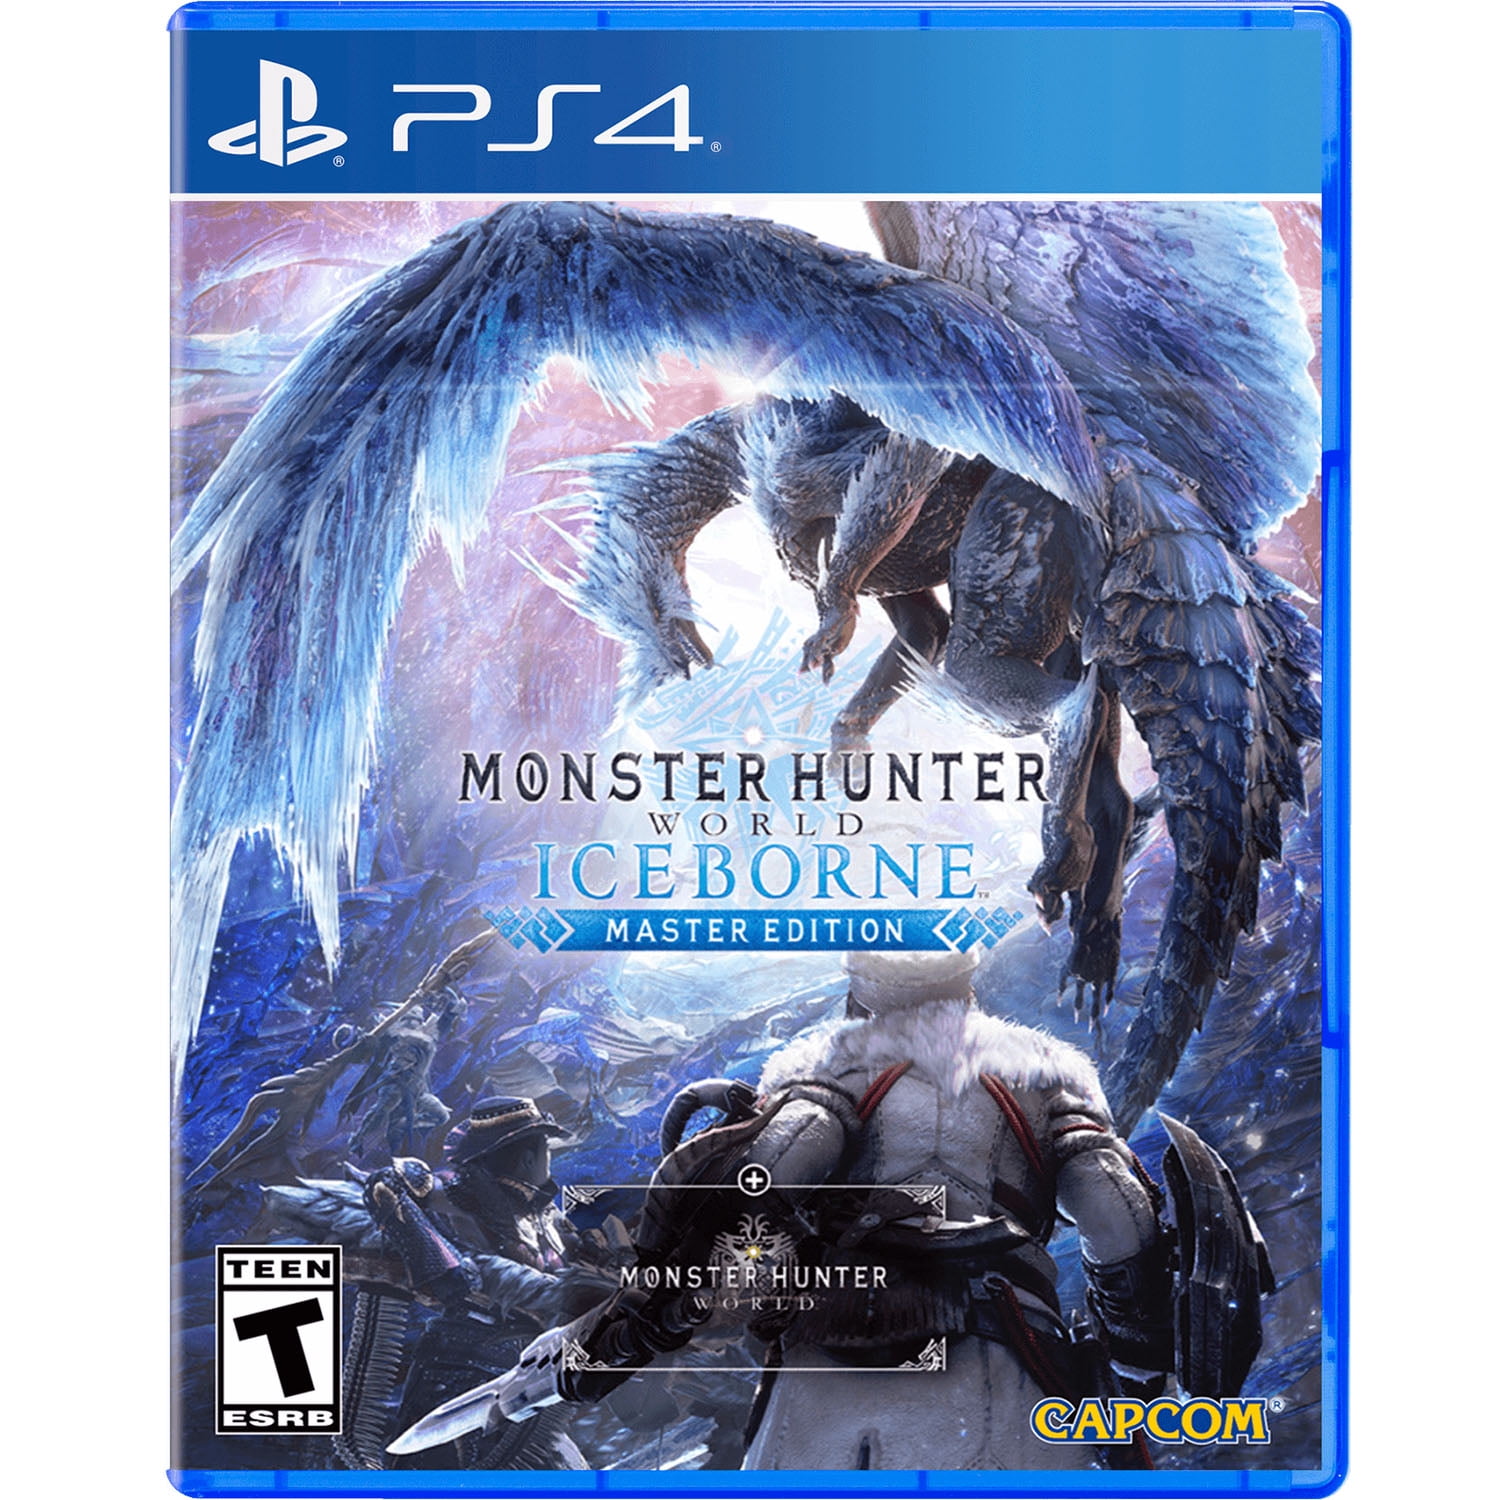 Monster Hunter World: Iceborne Master Edition, Capcom, PlayStation 4,  [Physical], 013388560547